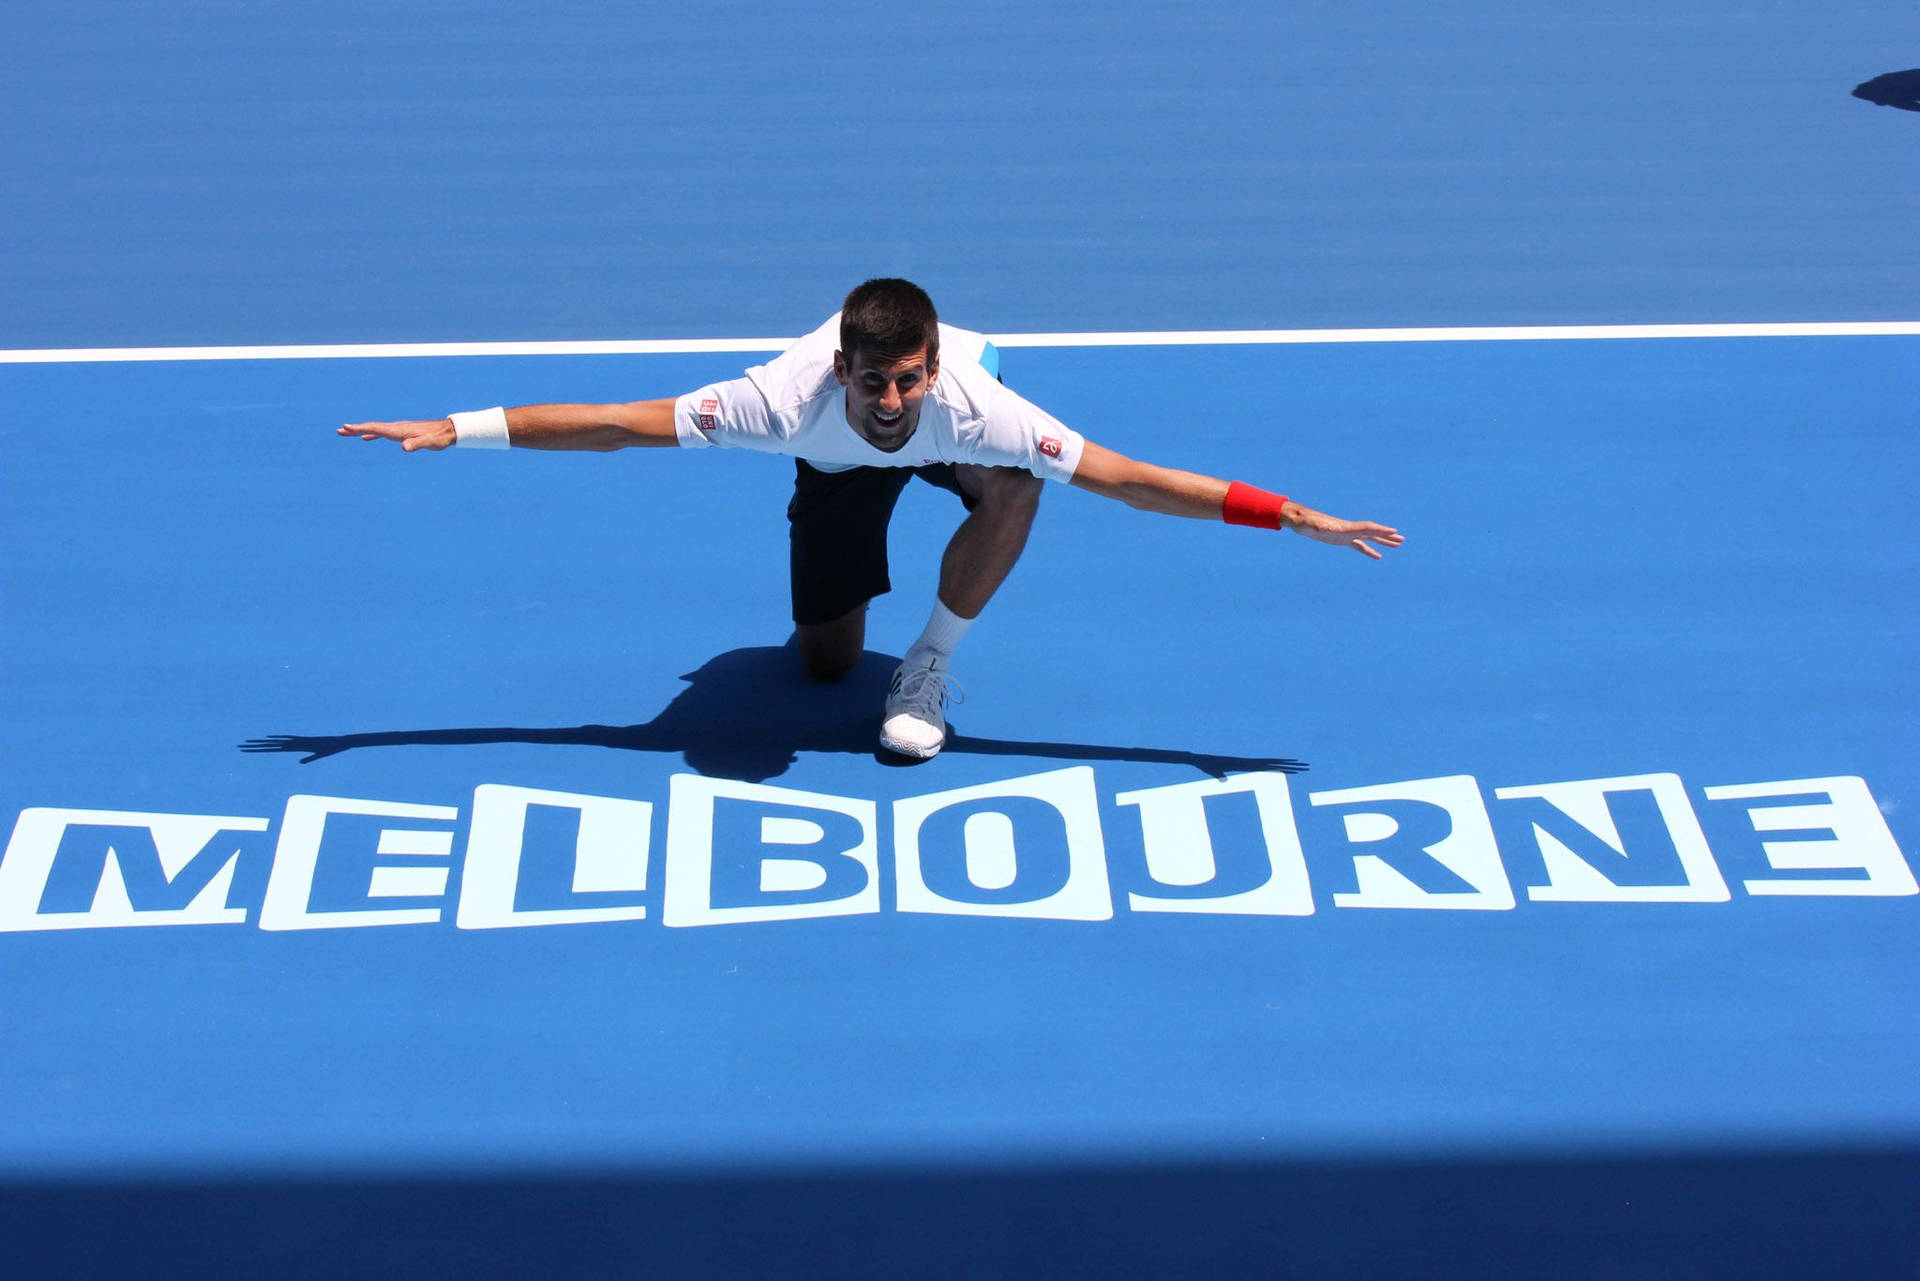 Australian Open Playful Photograph Of Novak Picture